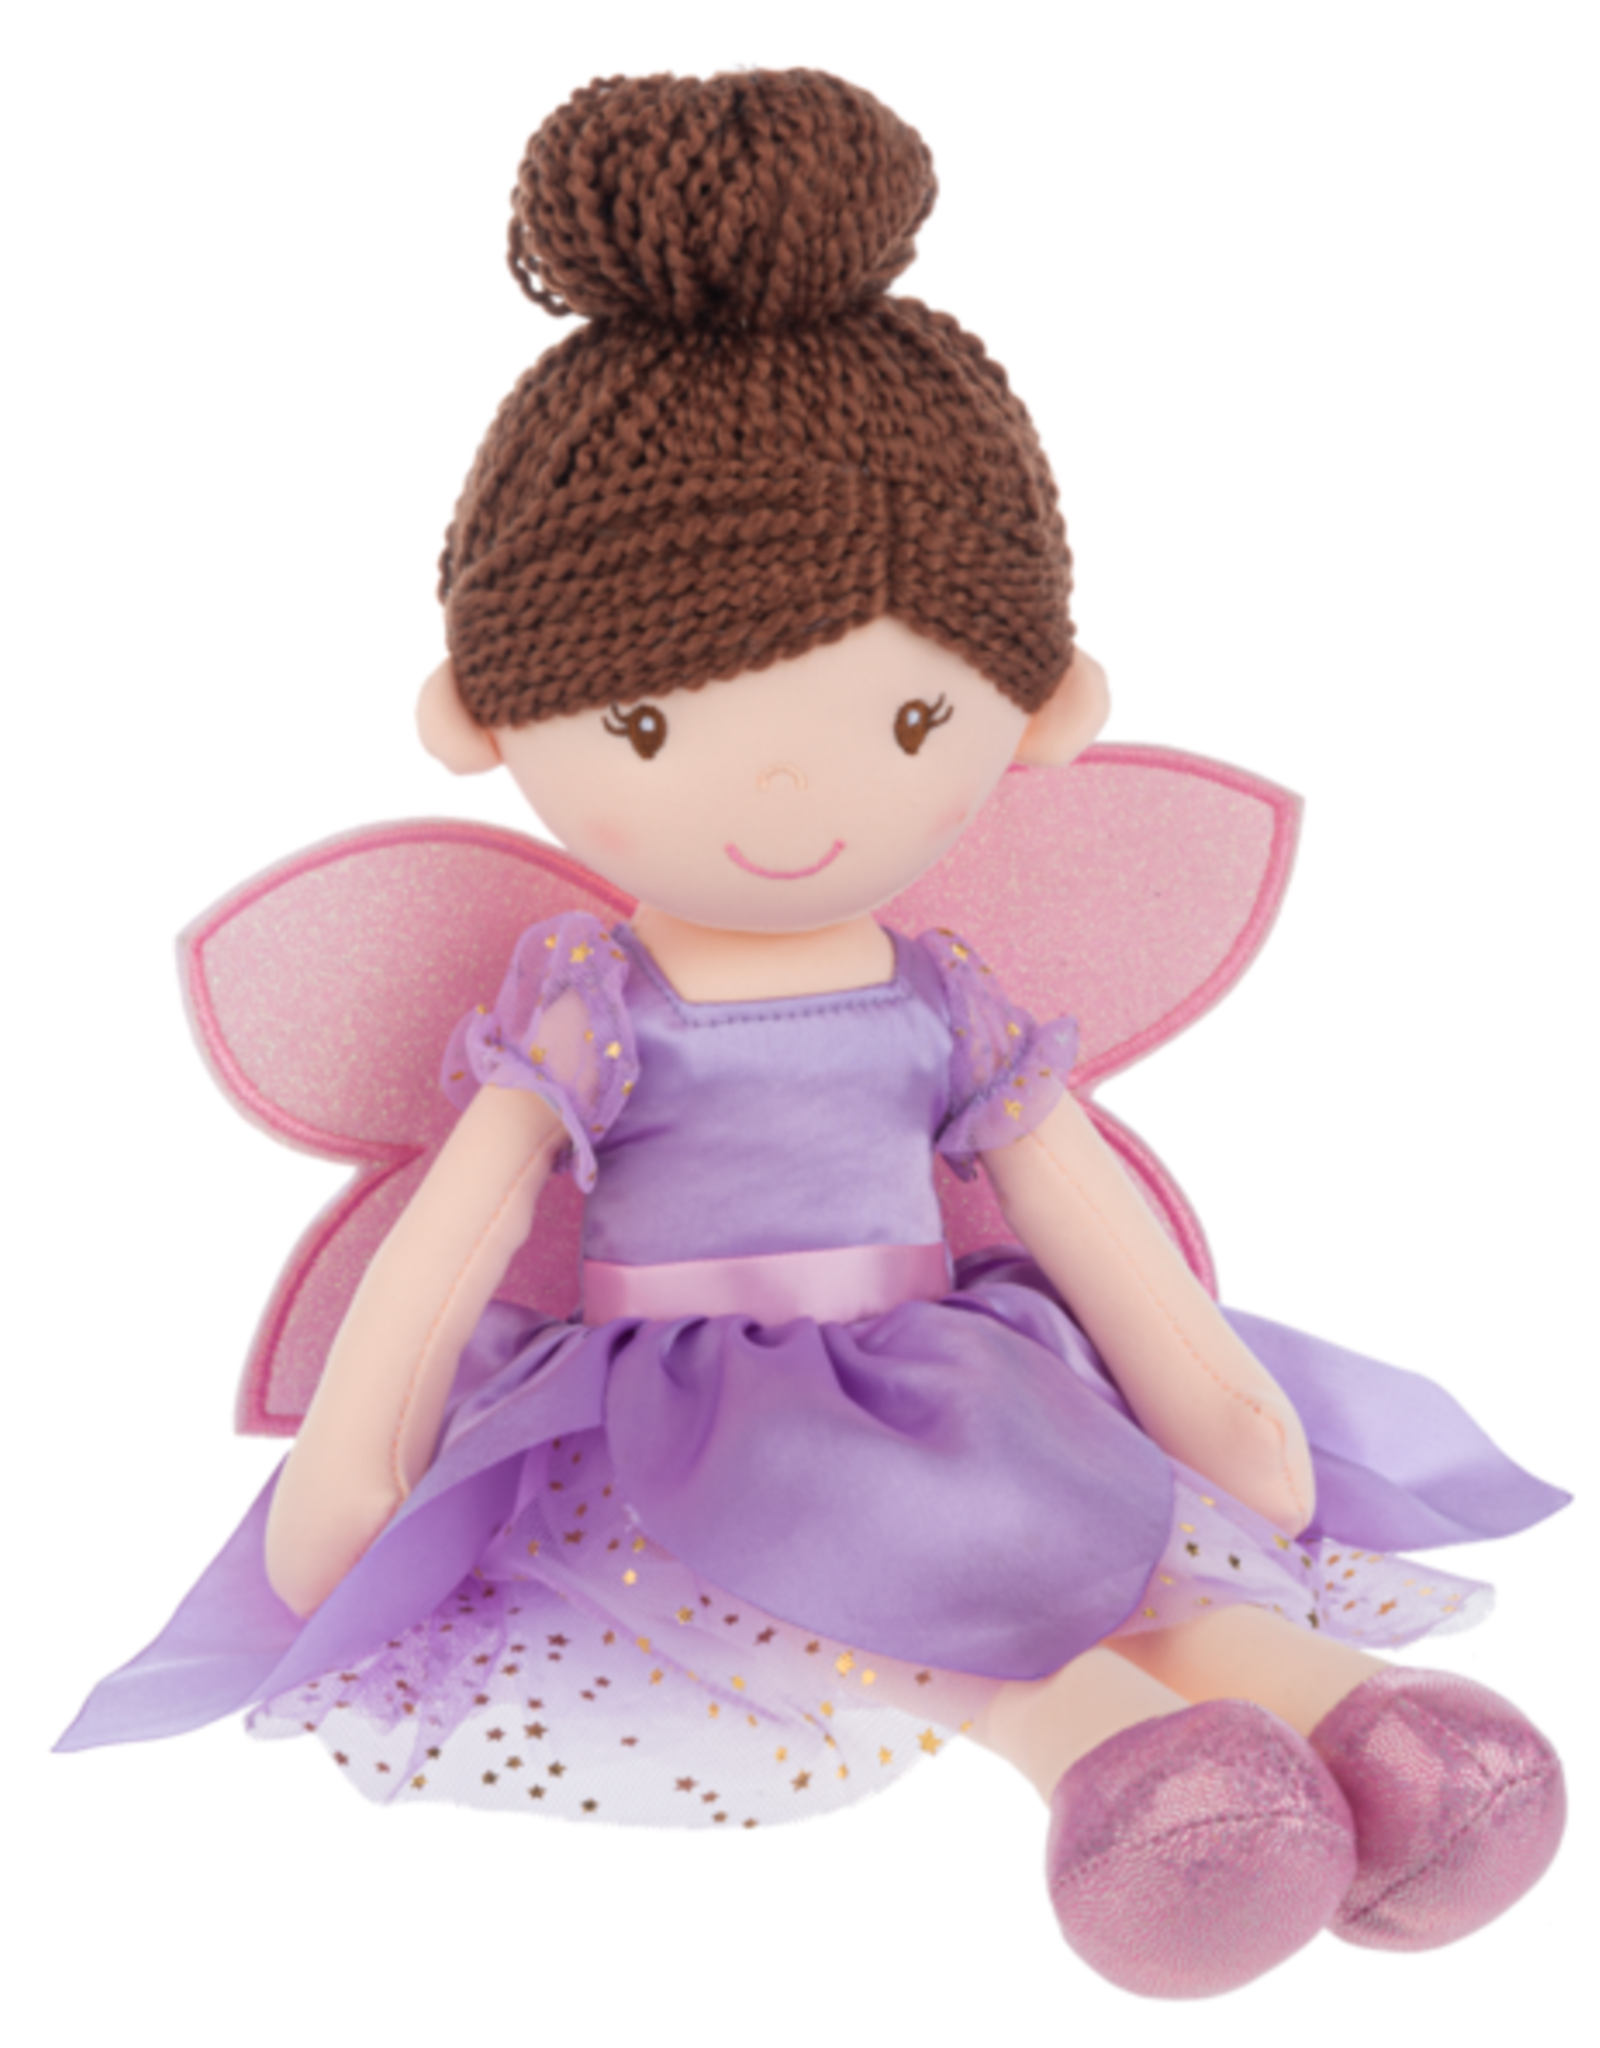 Ganz H15292 15" Fairy Doll Purple